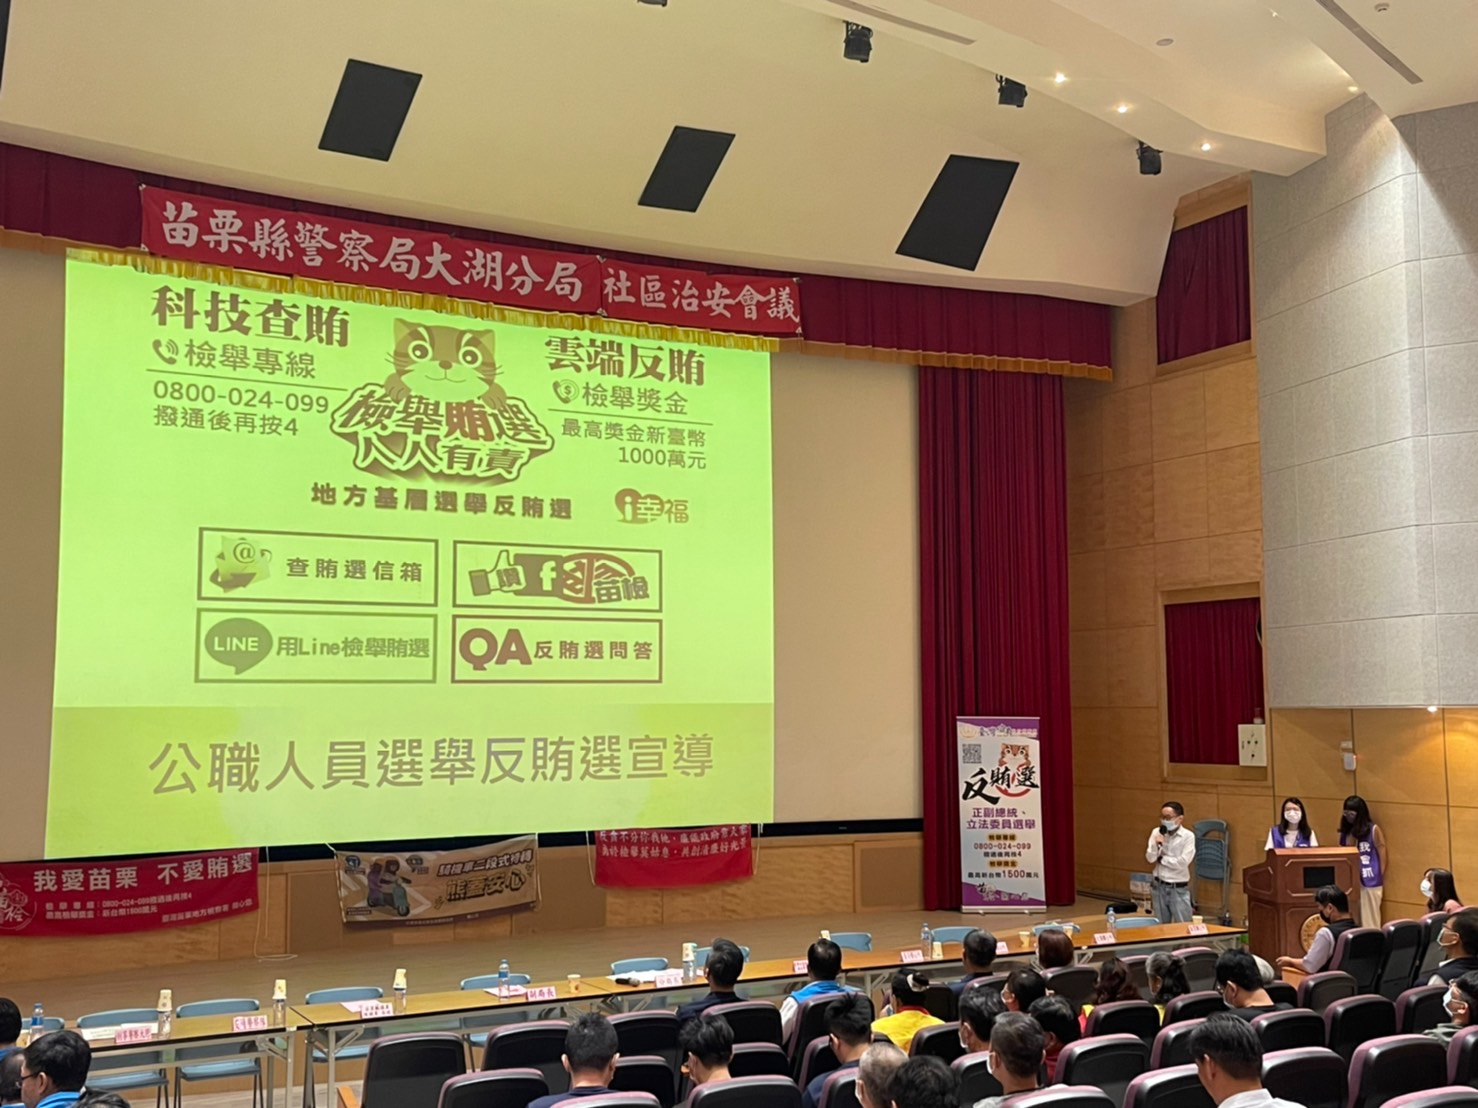 Anti-bribery propaganda at the Dahu Branch Public Security Conference